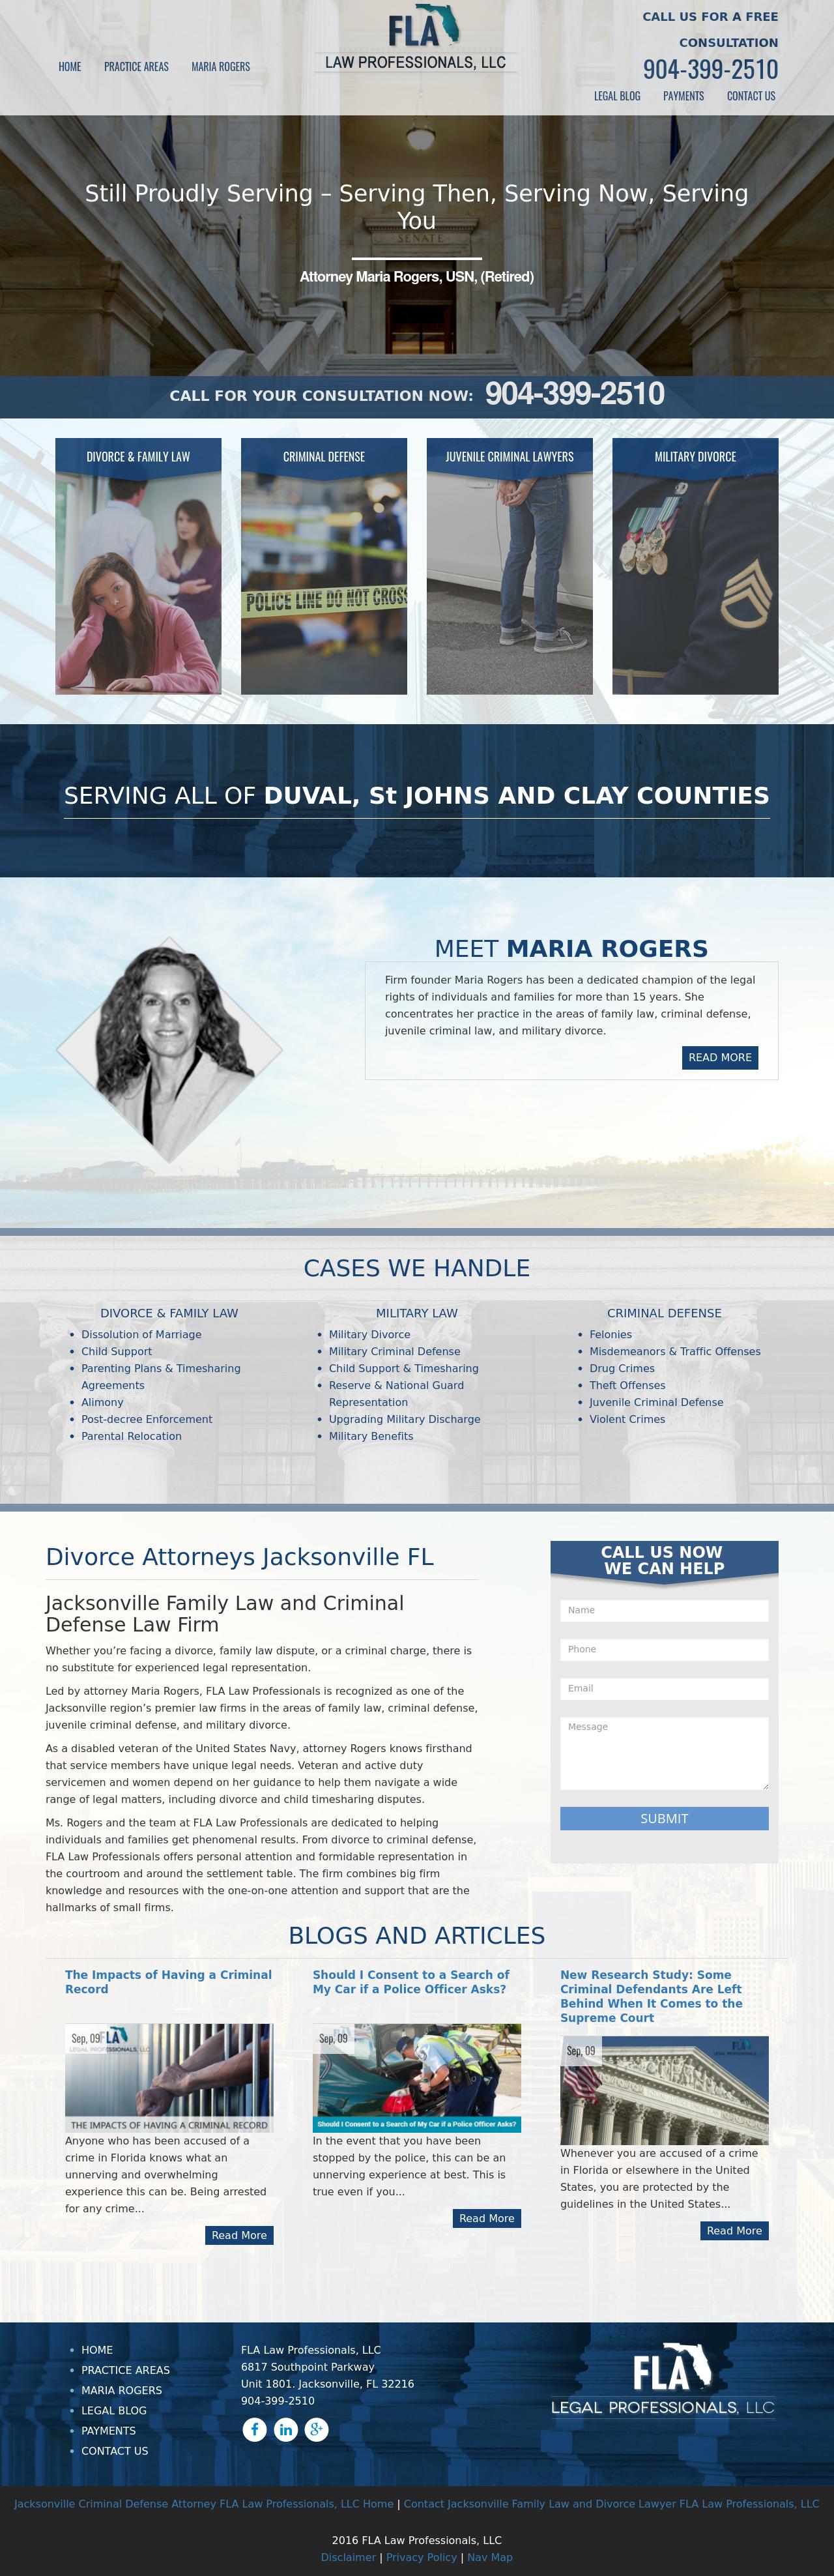 FLA Legal Professionals, LLC - Jacksonville FL Lawyers